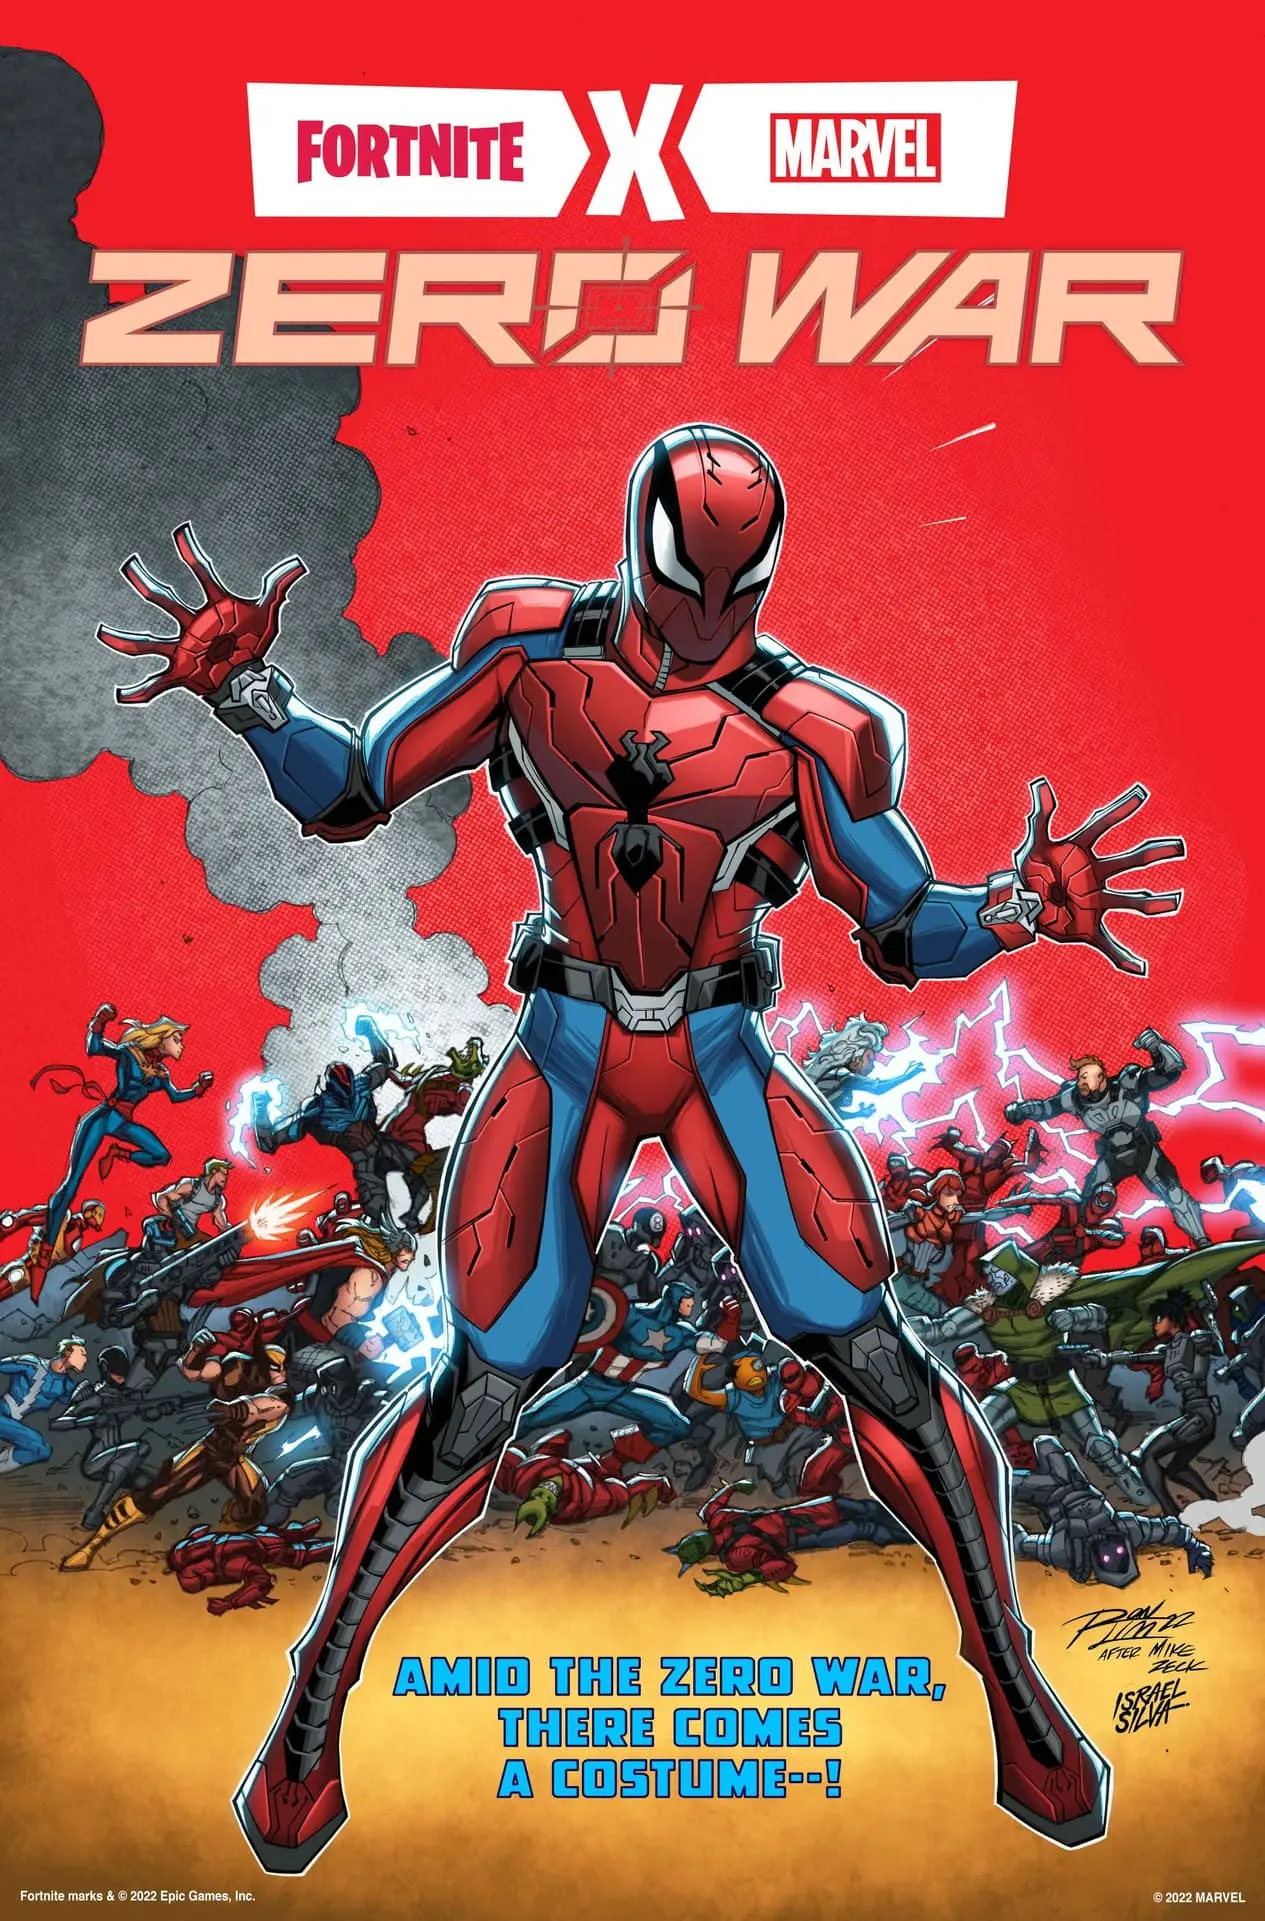 Fortnite x Marvel: Zero War - Spider-Man Zero Outfit DLC (PC) - Epic Games - Digital Code